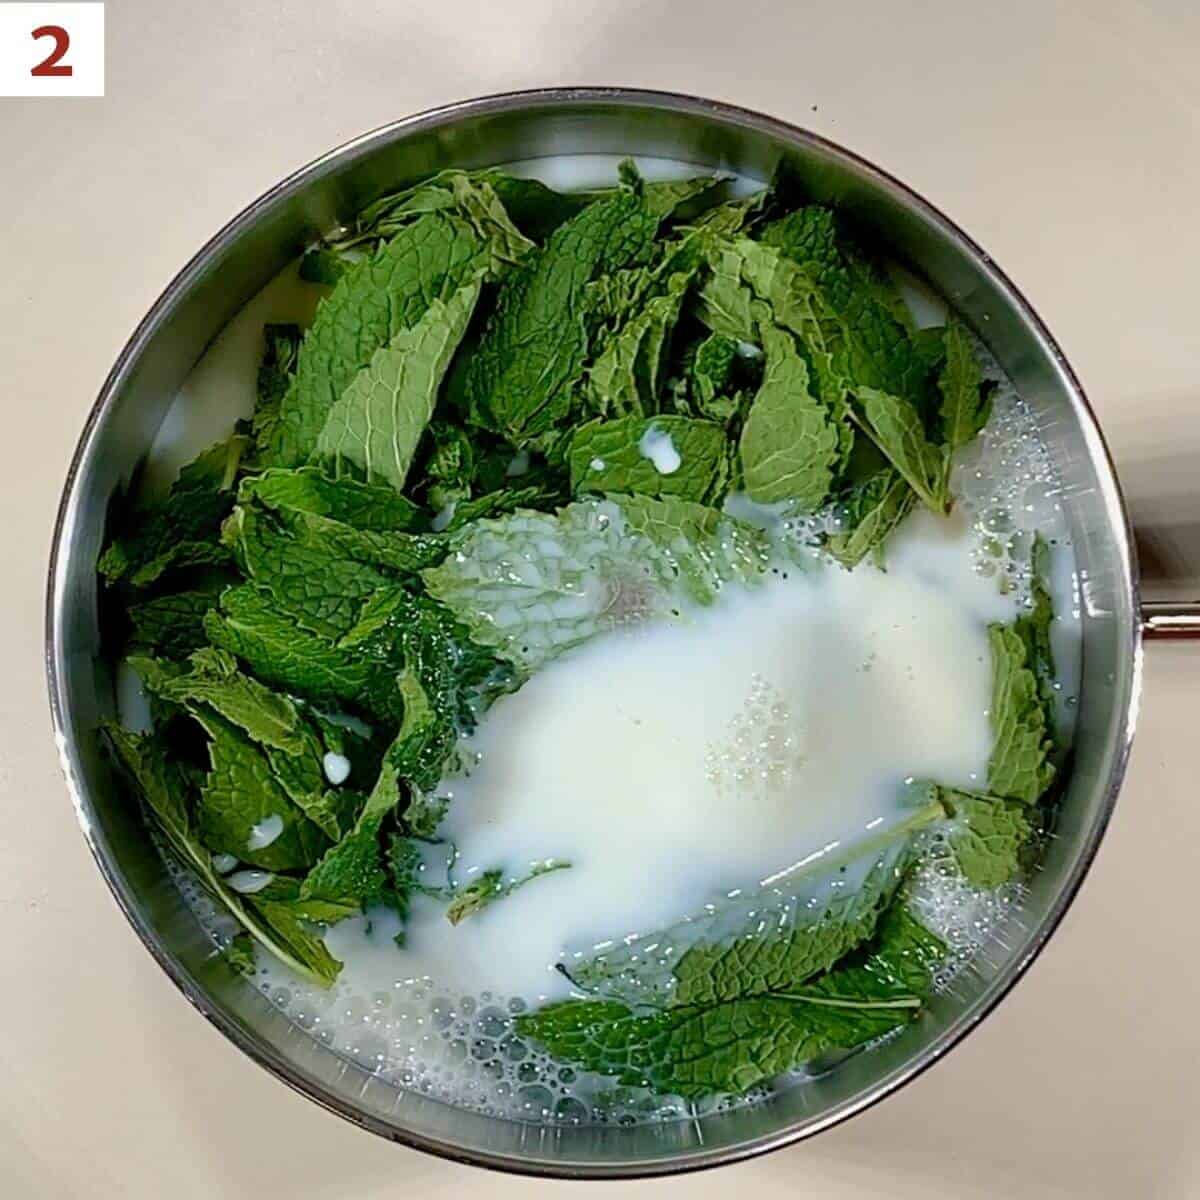 Milk & mint leaves in a saucepan.